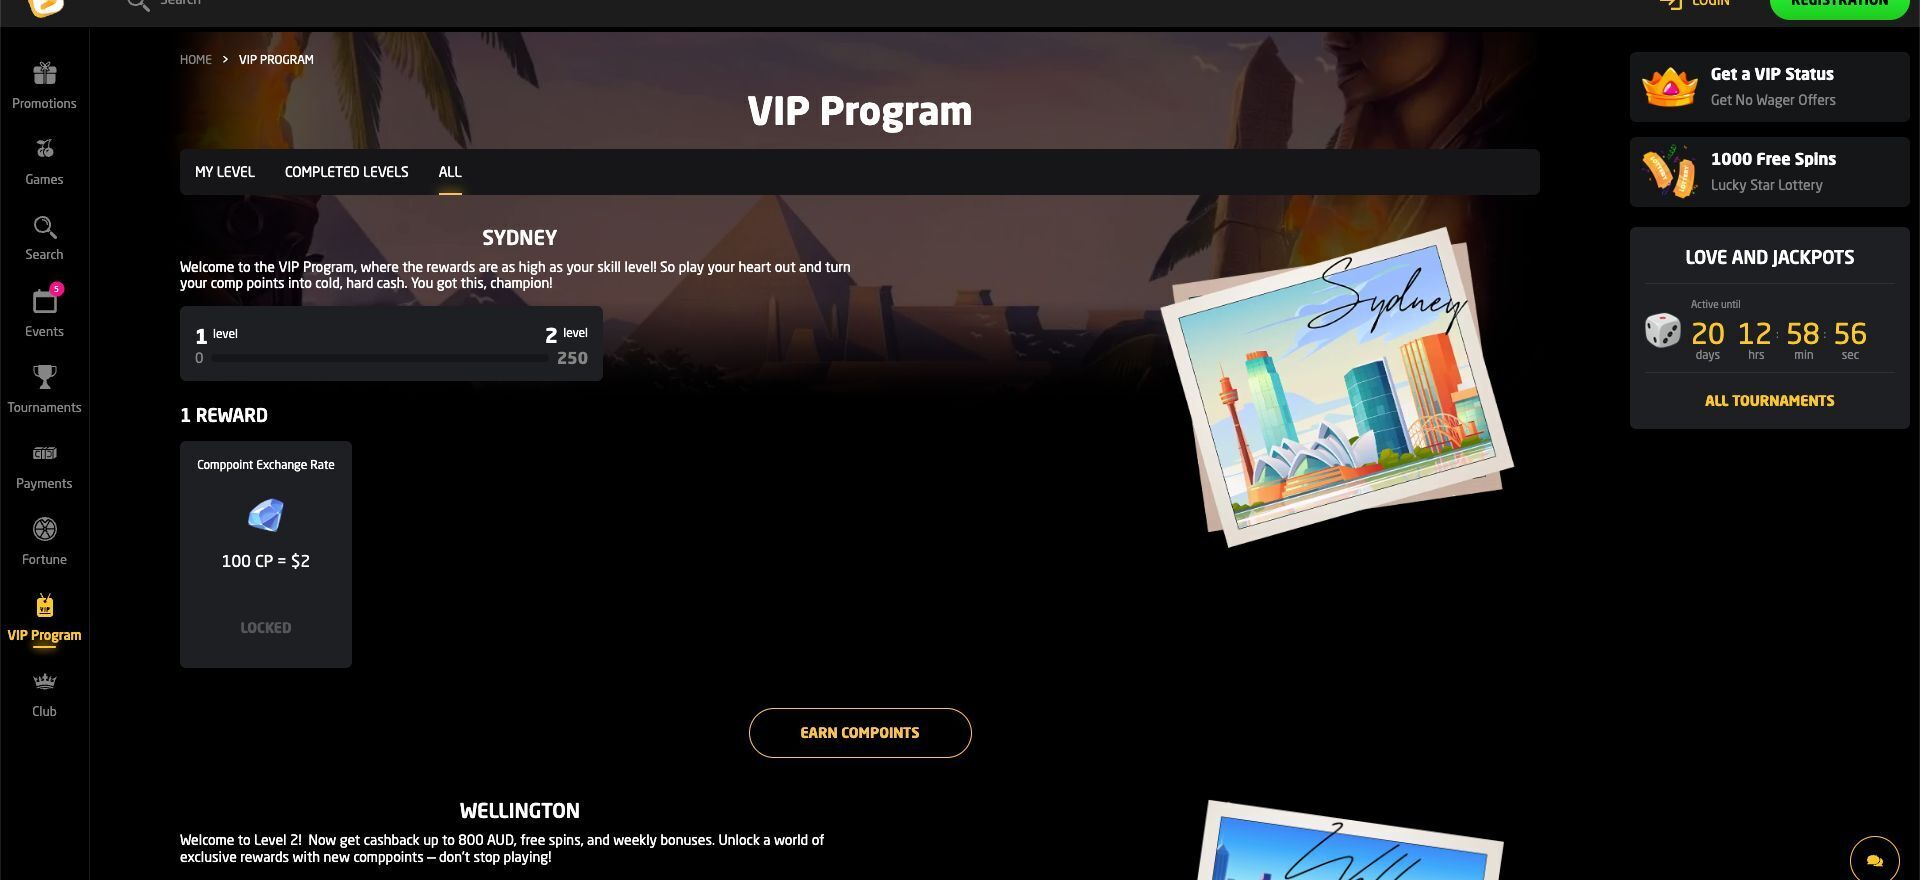 Stay Casino VIP Program